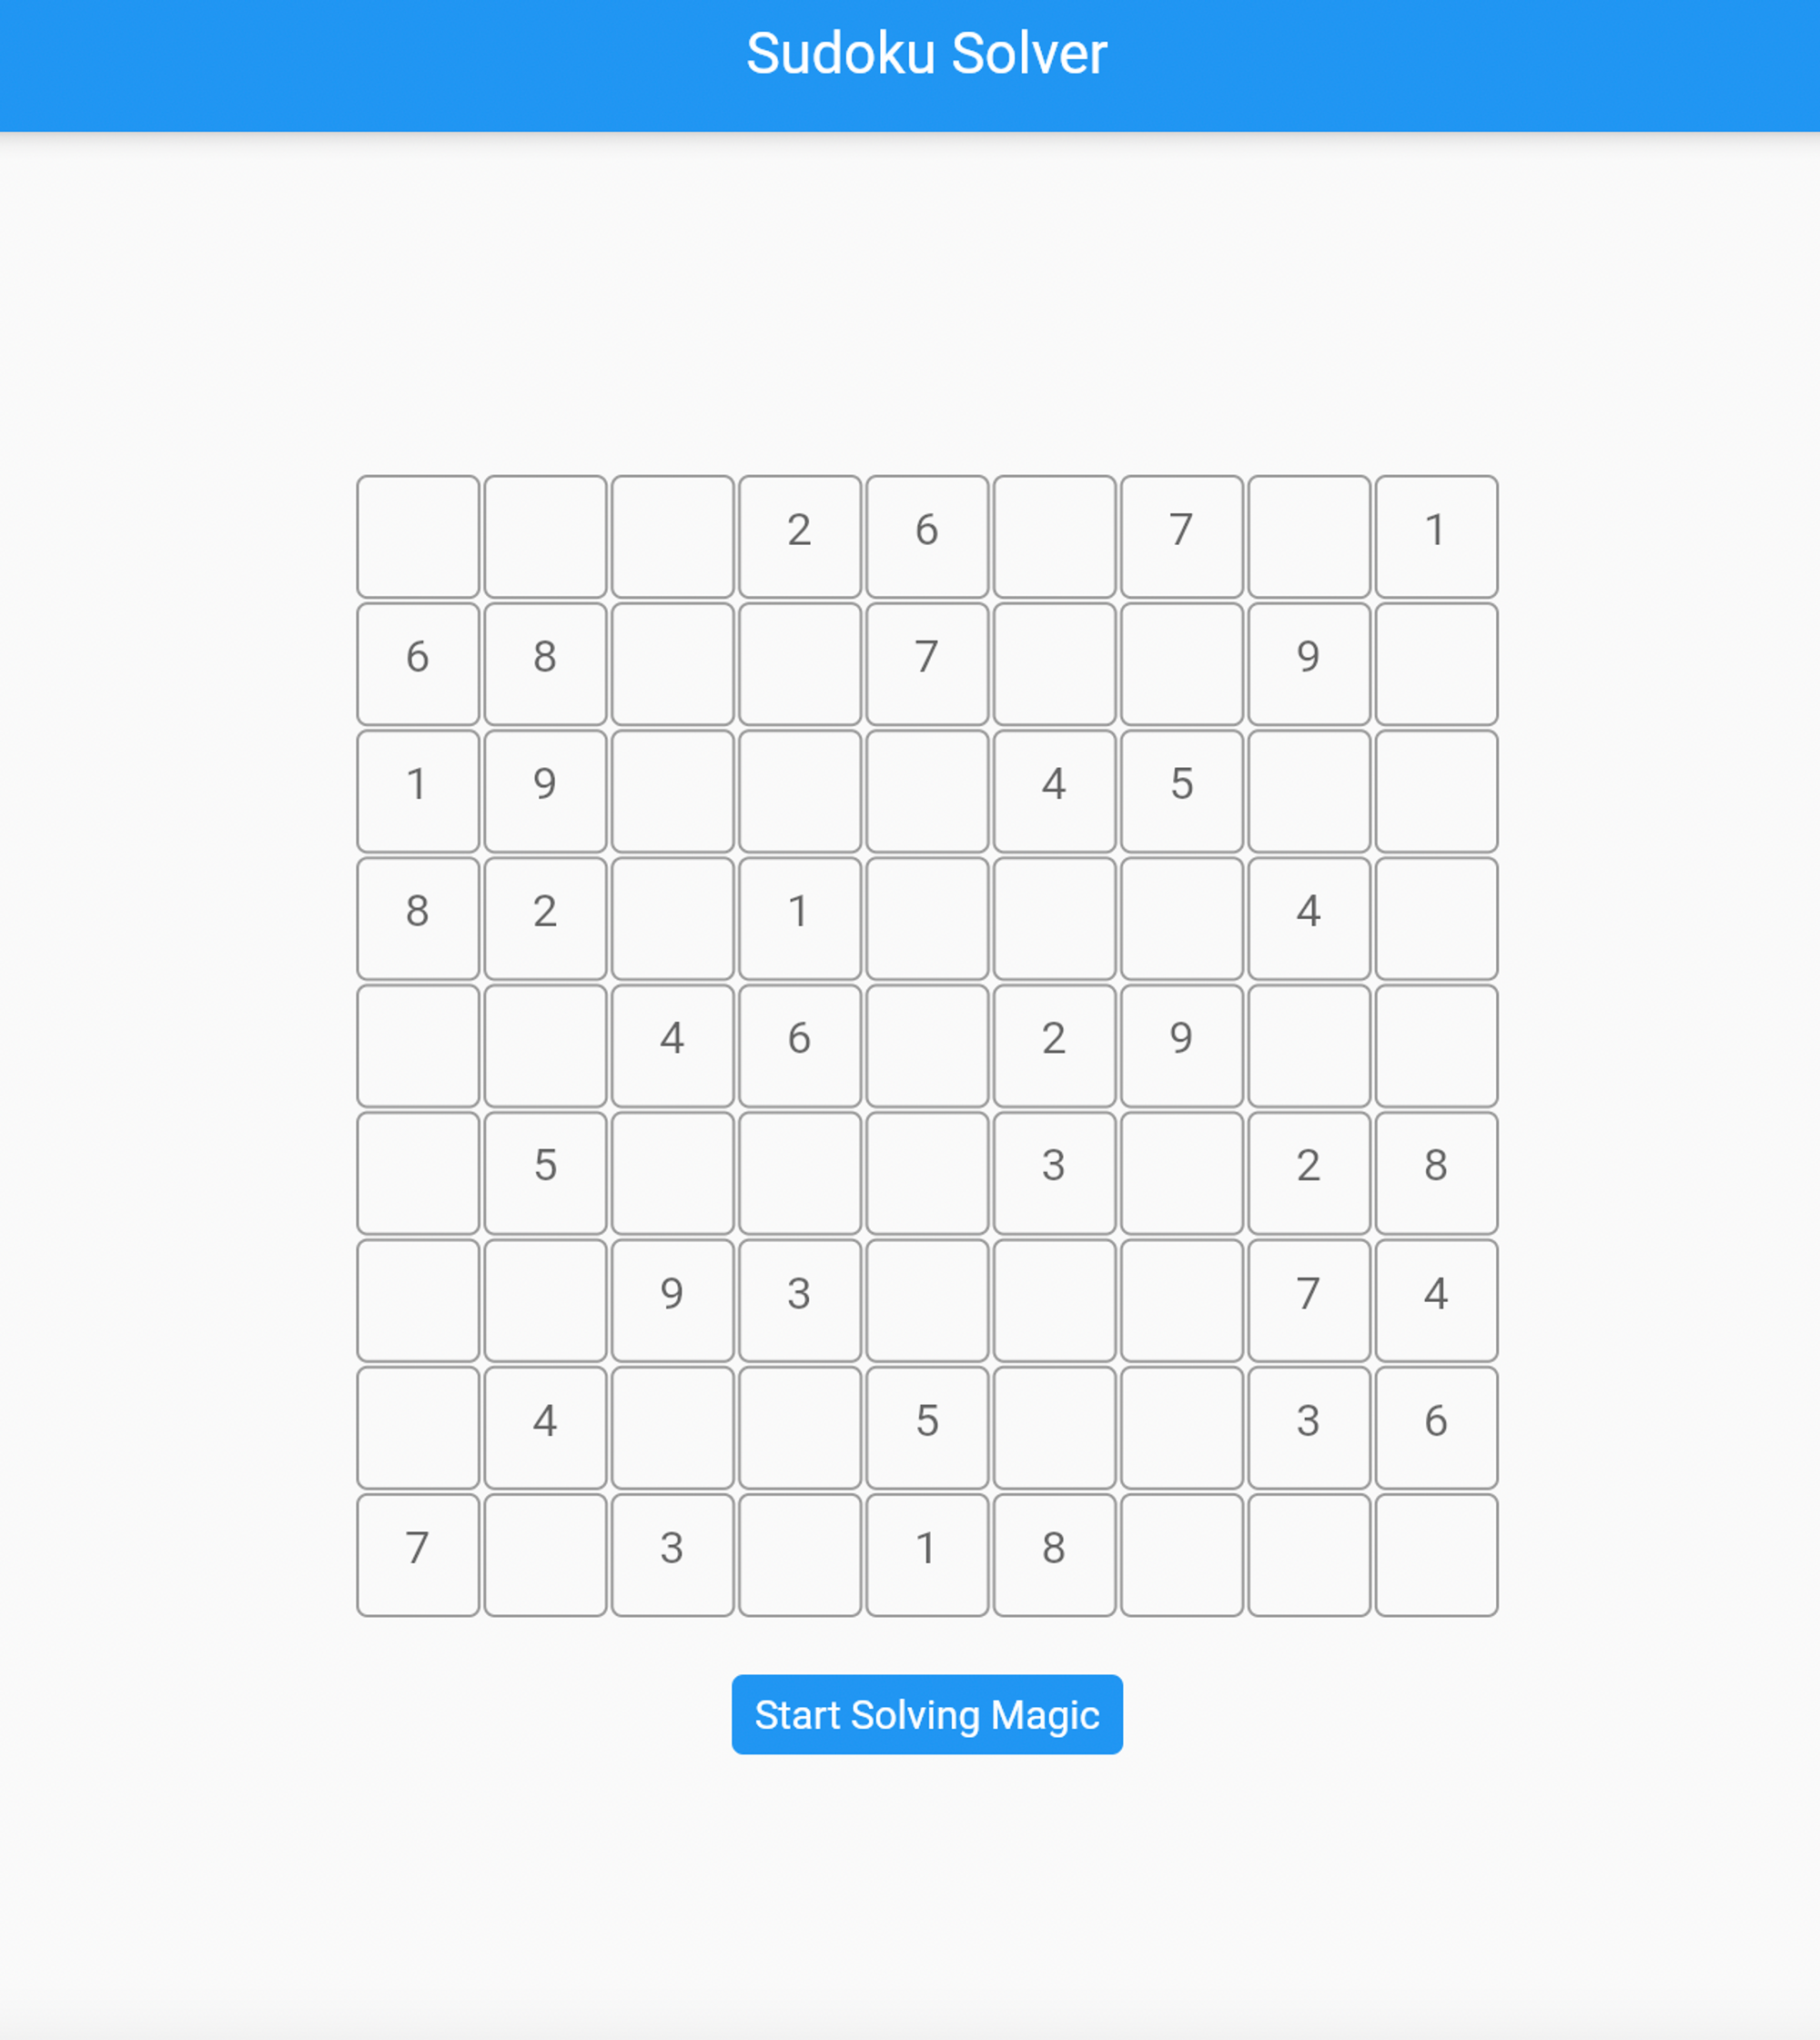 GitHub - brookslyrette/react-sudoku-solver: A sudoku solver